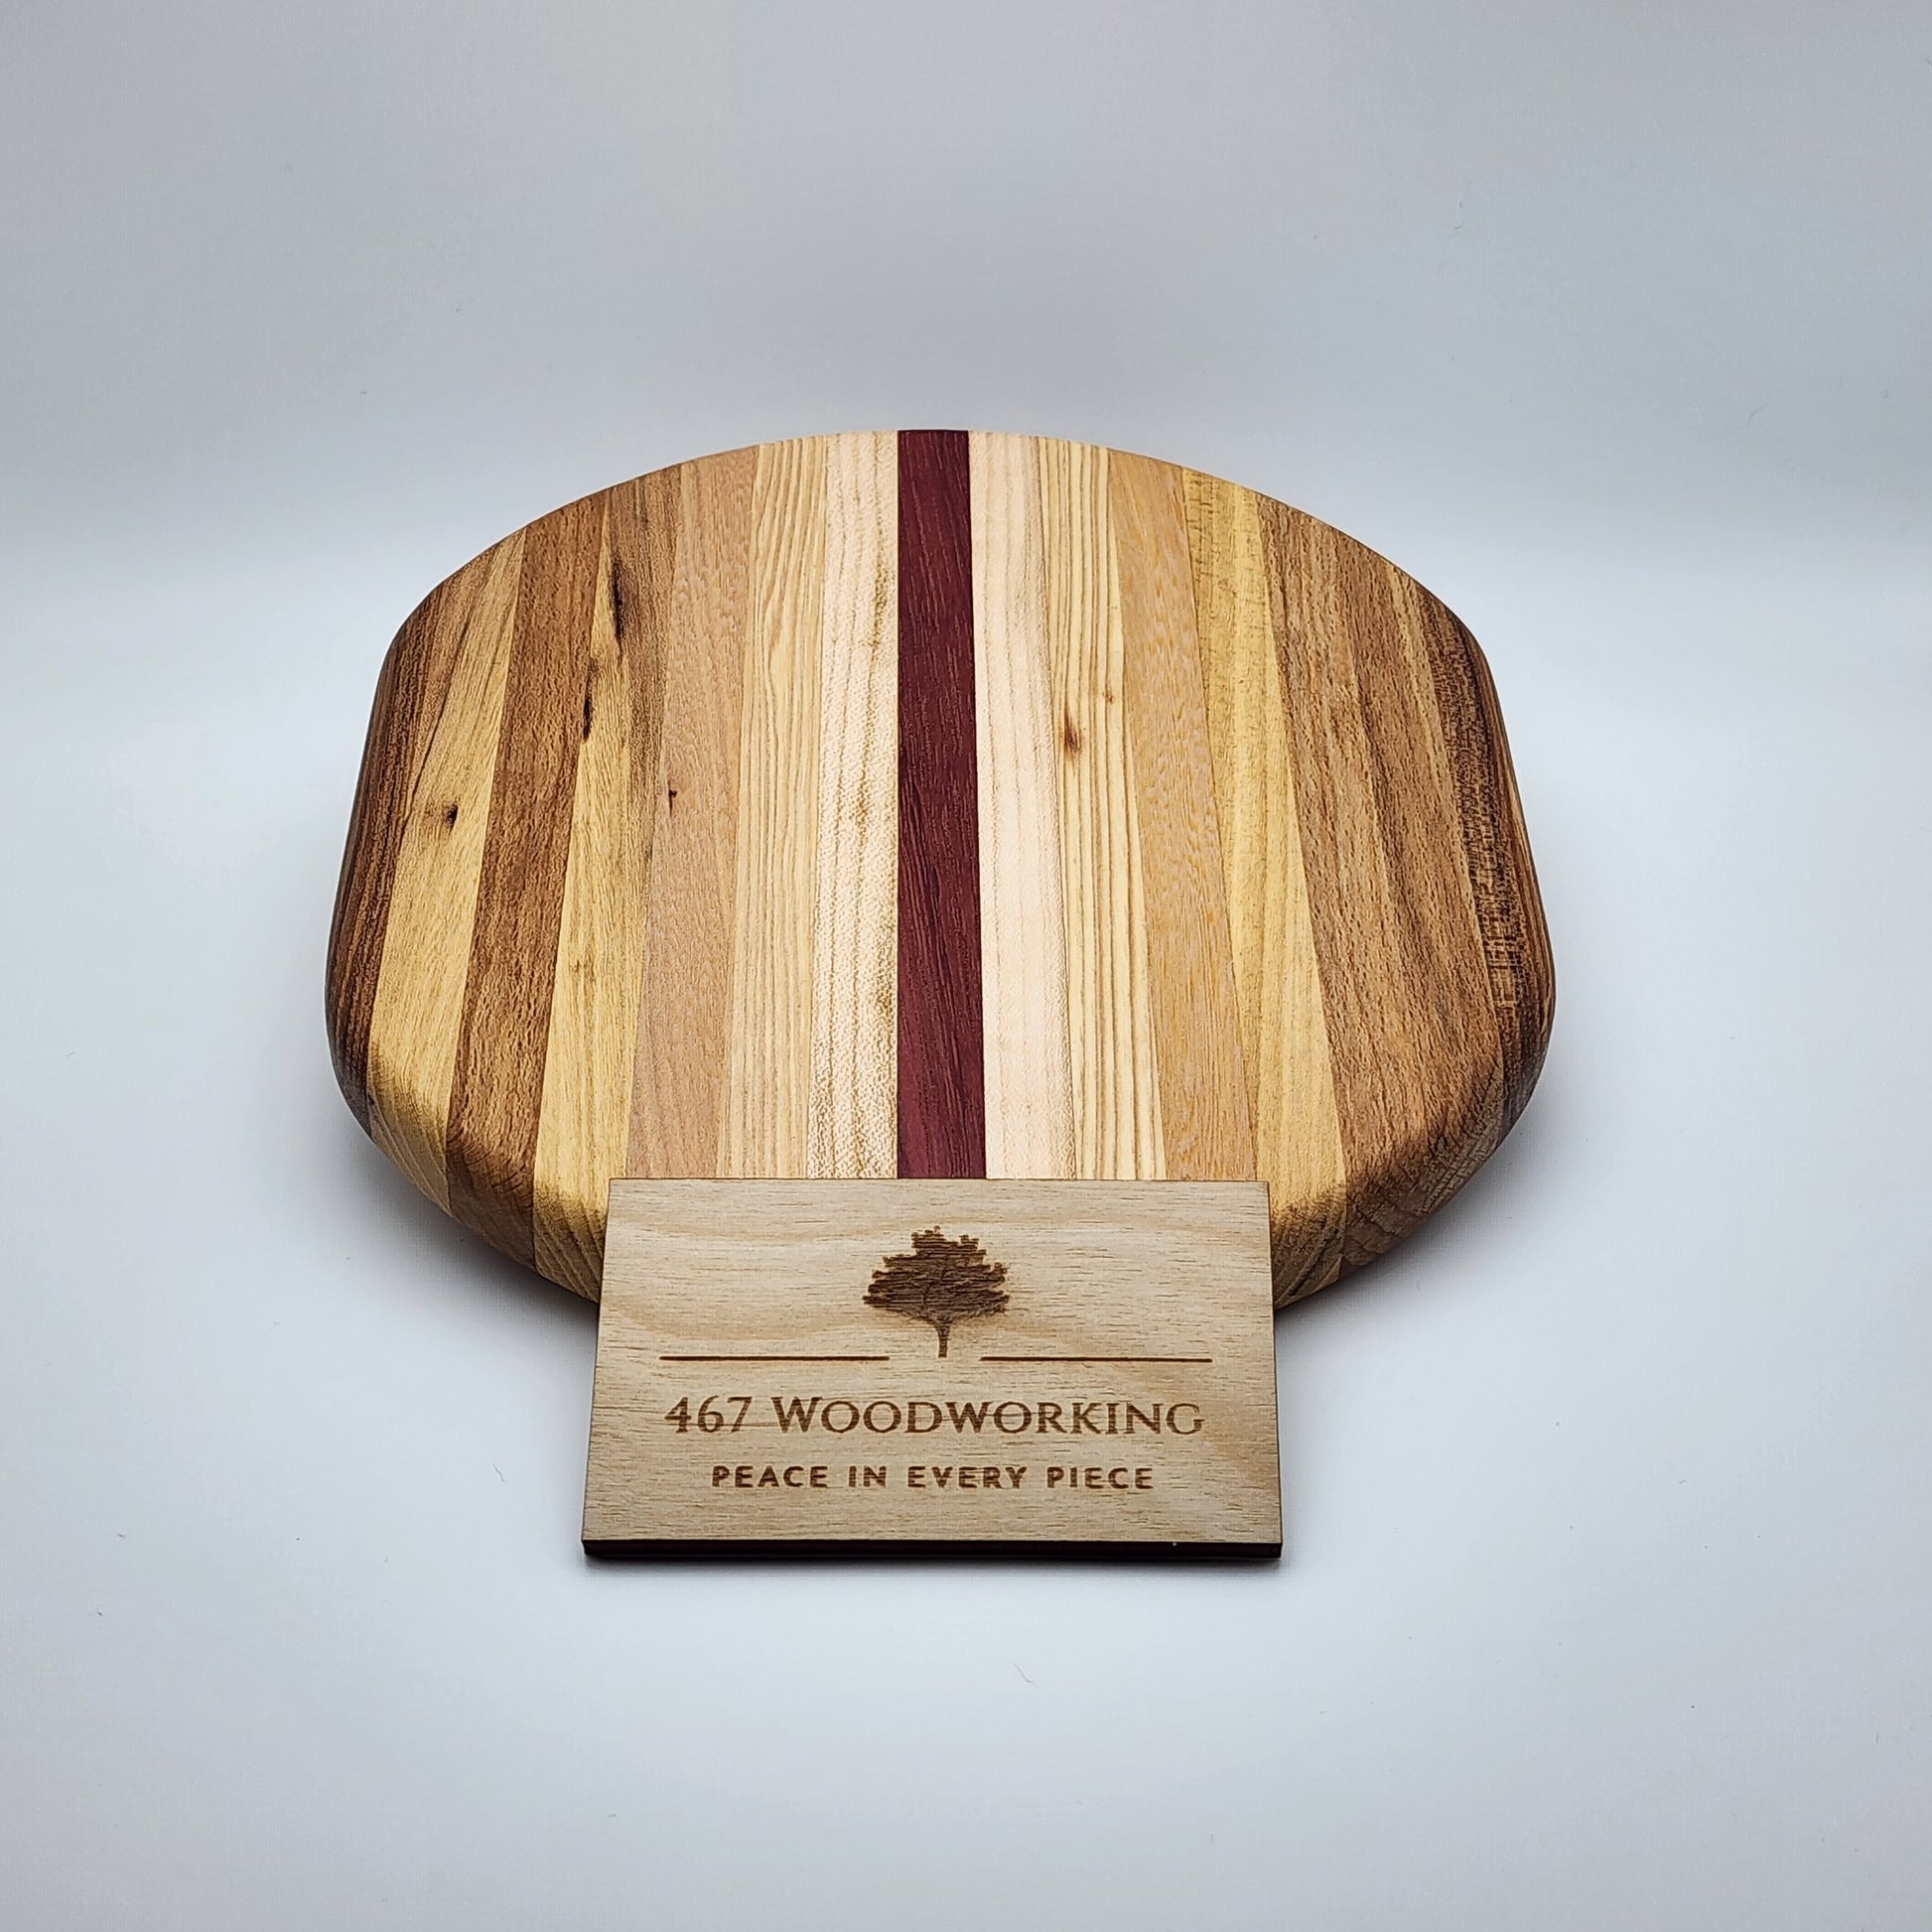 8" Round "Jupiter" Cutting Board - Hardwood - Domestic Hardwood - Exotic Hardwood - Cookware - Board - Handmade - Wood - Wooden - Multicolor